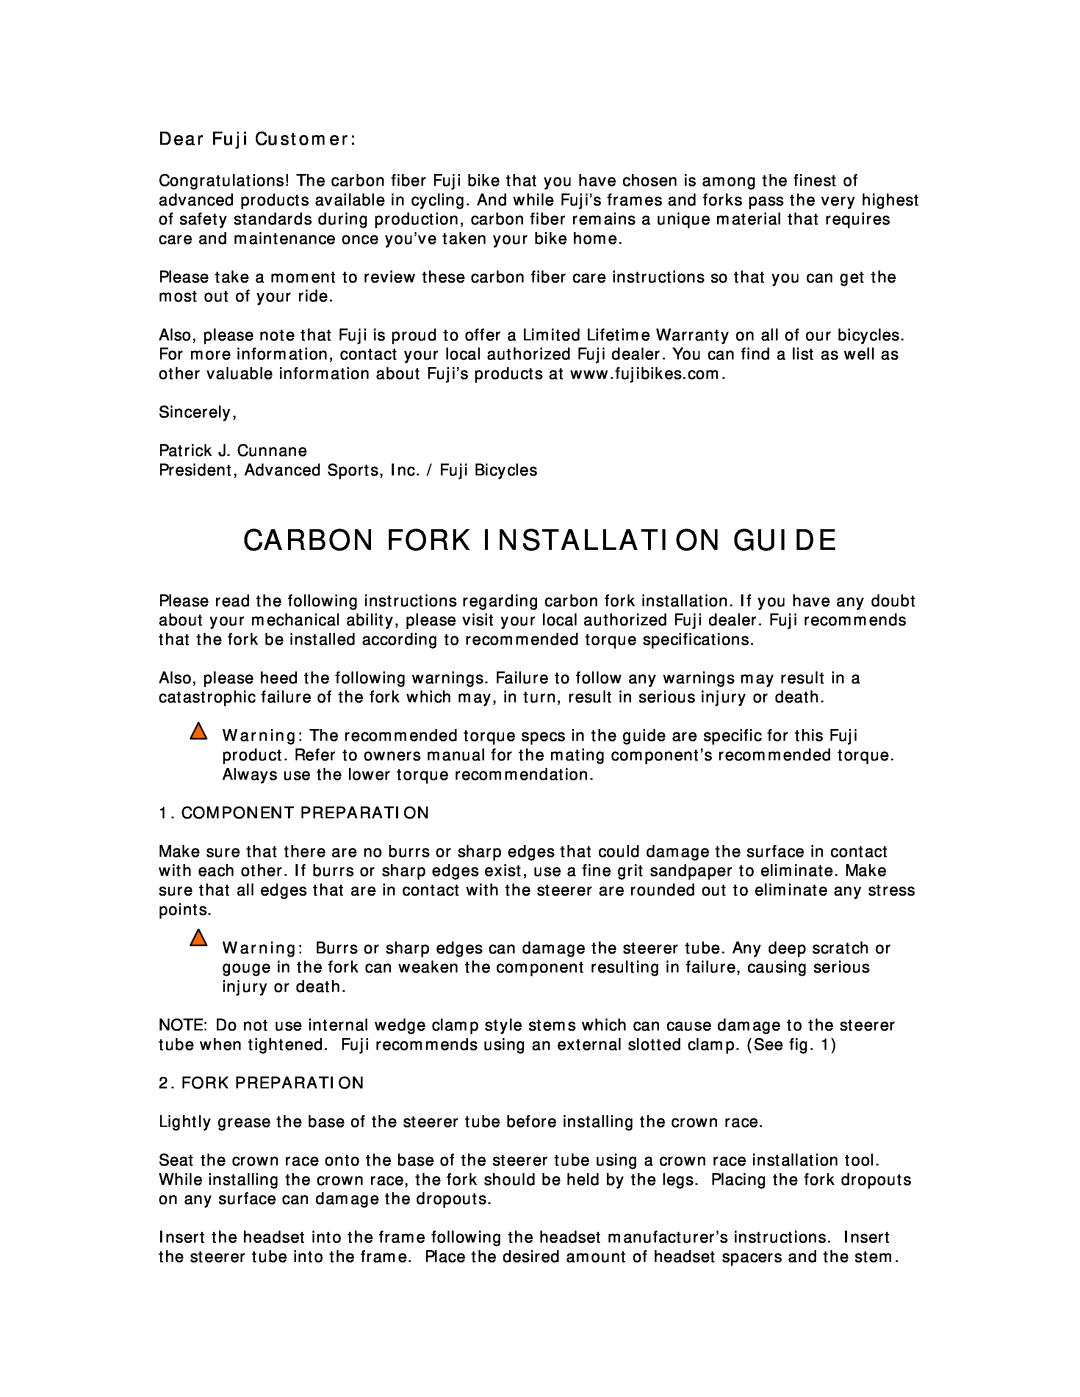 Fuji Bikes Team (US) warranty Carbon Fork Installation Guide, Component Preparation, Fork Preparation, Dear Fuji Customer 